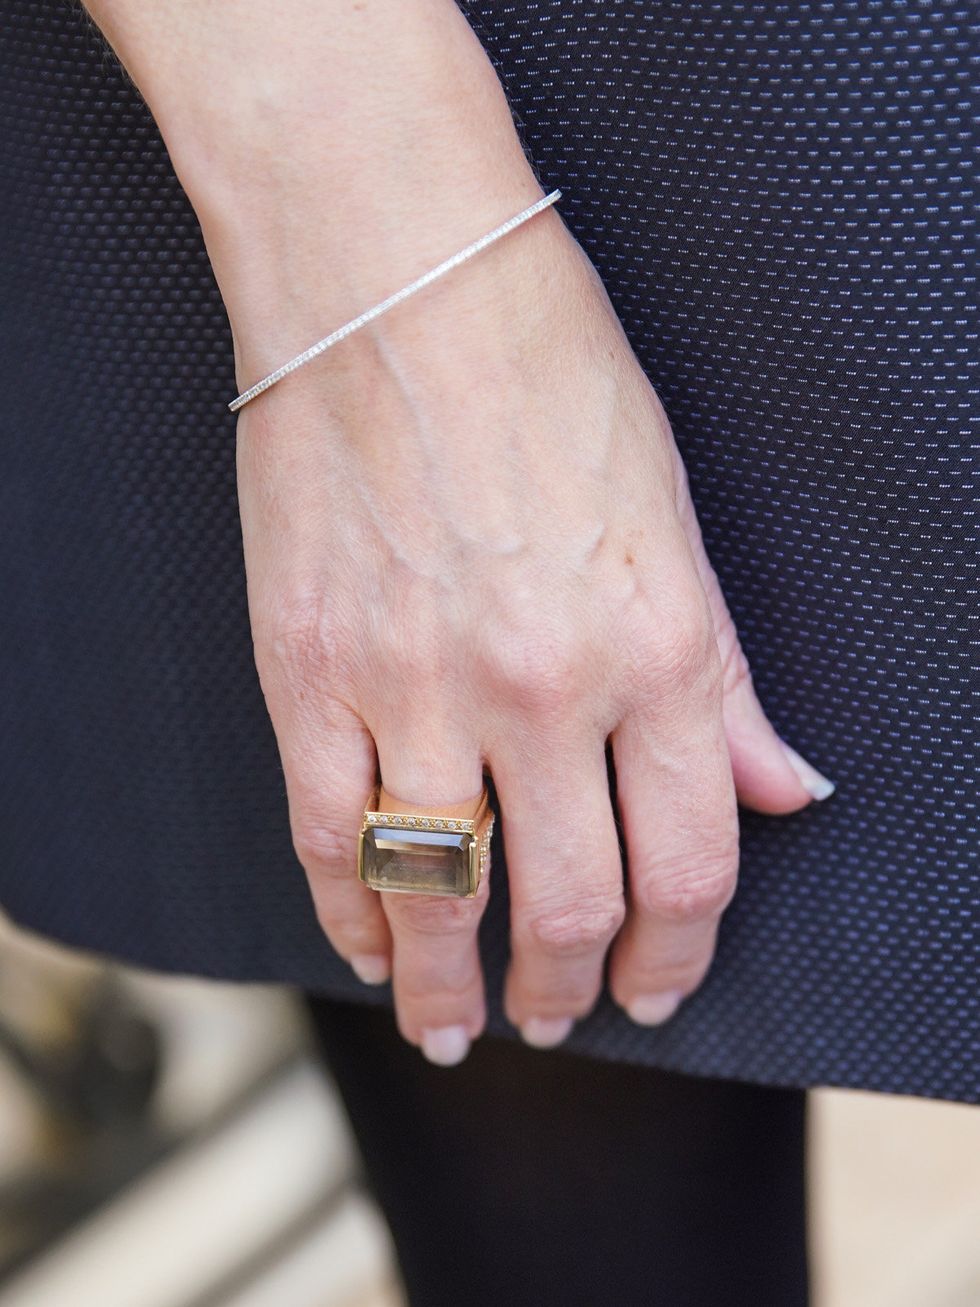 Finger, Jewellery, Wrist, Fashion accessory, Ring, Engagement ring, Wedding ring, Pre-engagement ring, Body jewelry, Nail, 